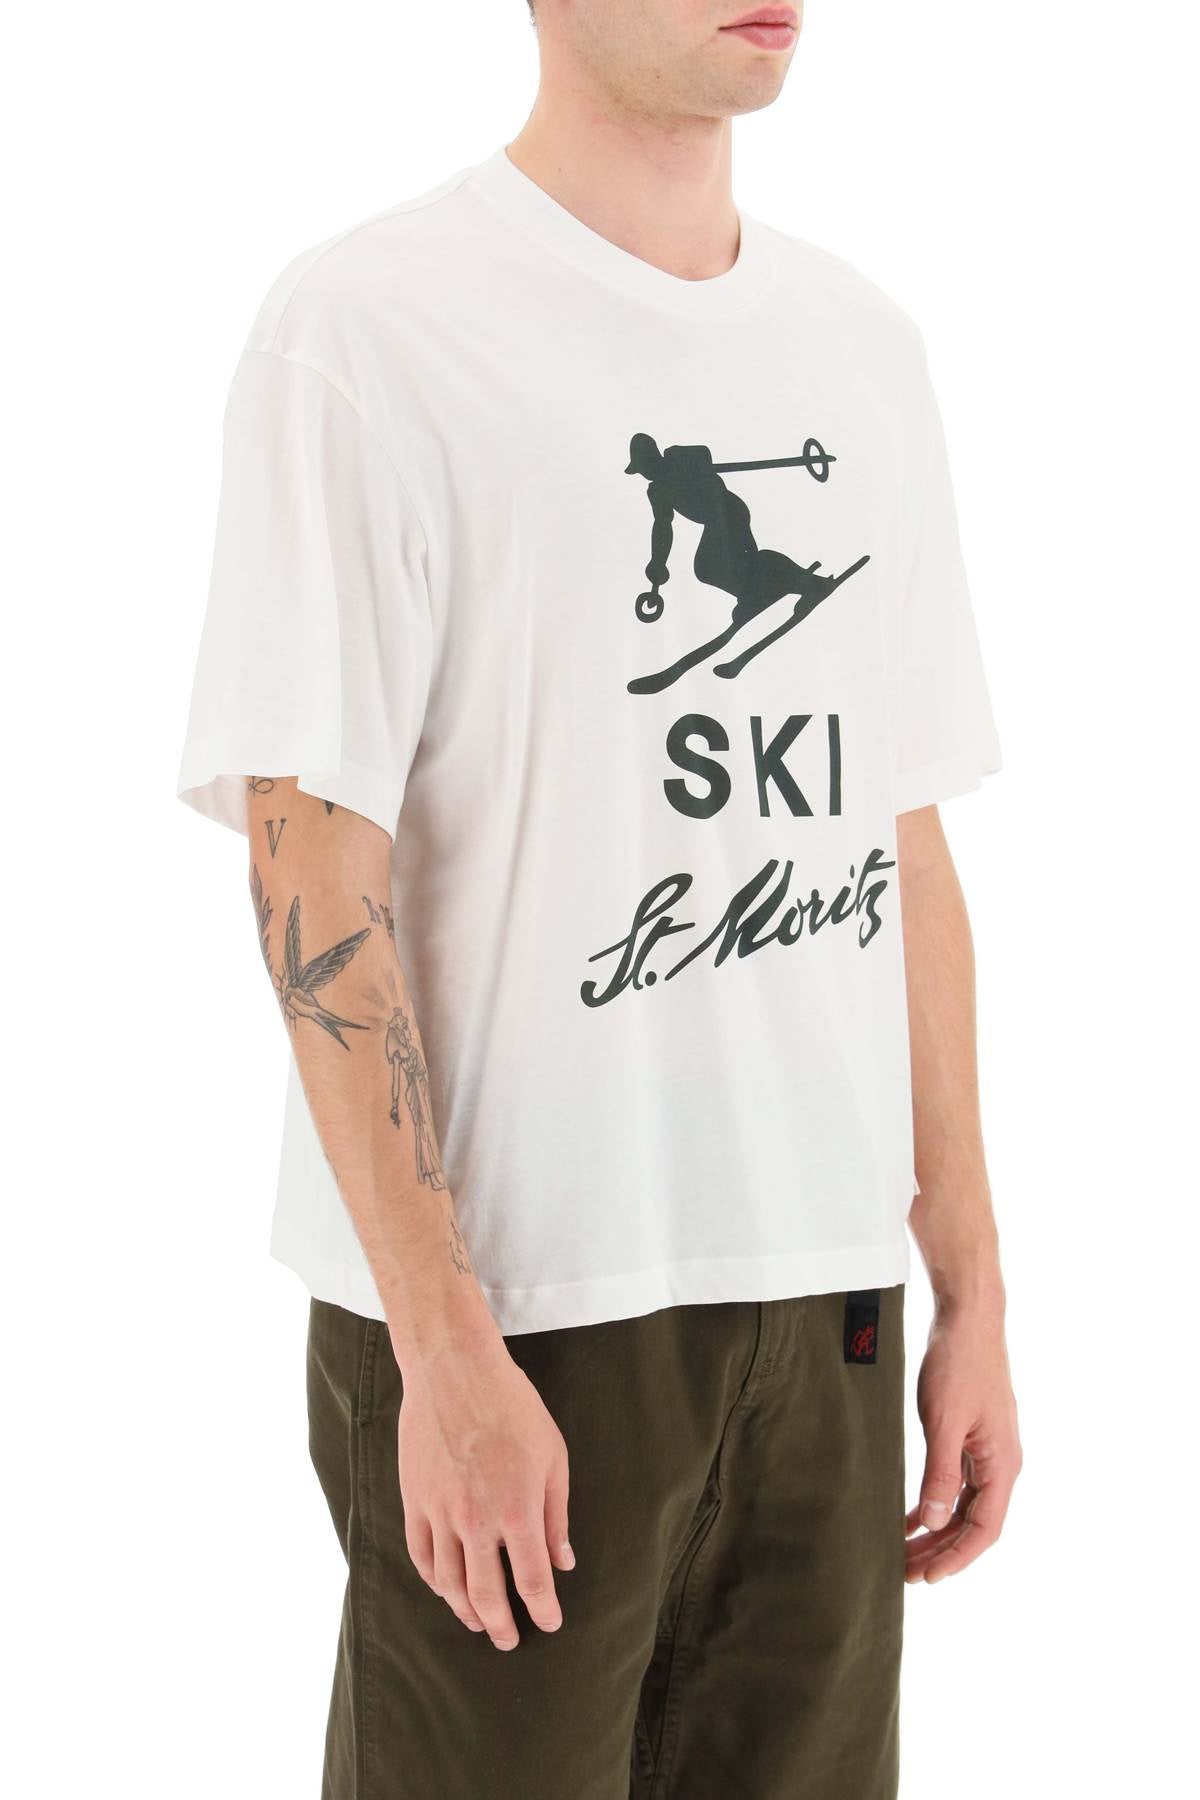 Bally 'Ski St. Moritz' Print T-Shirt-Bally-L-Urbanheer